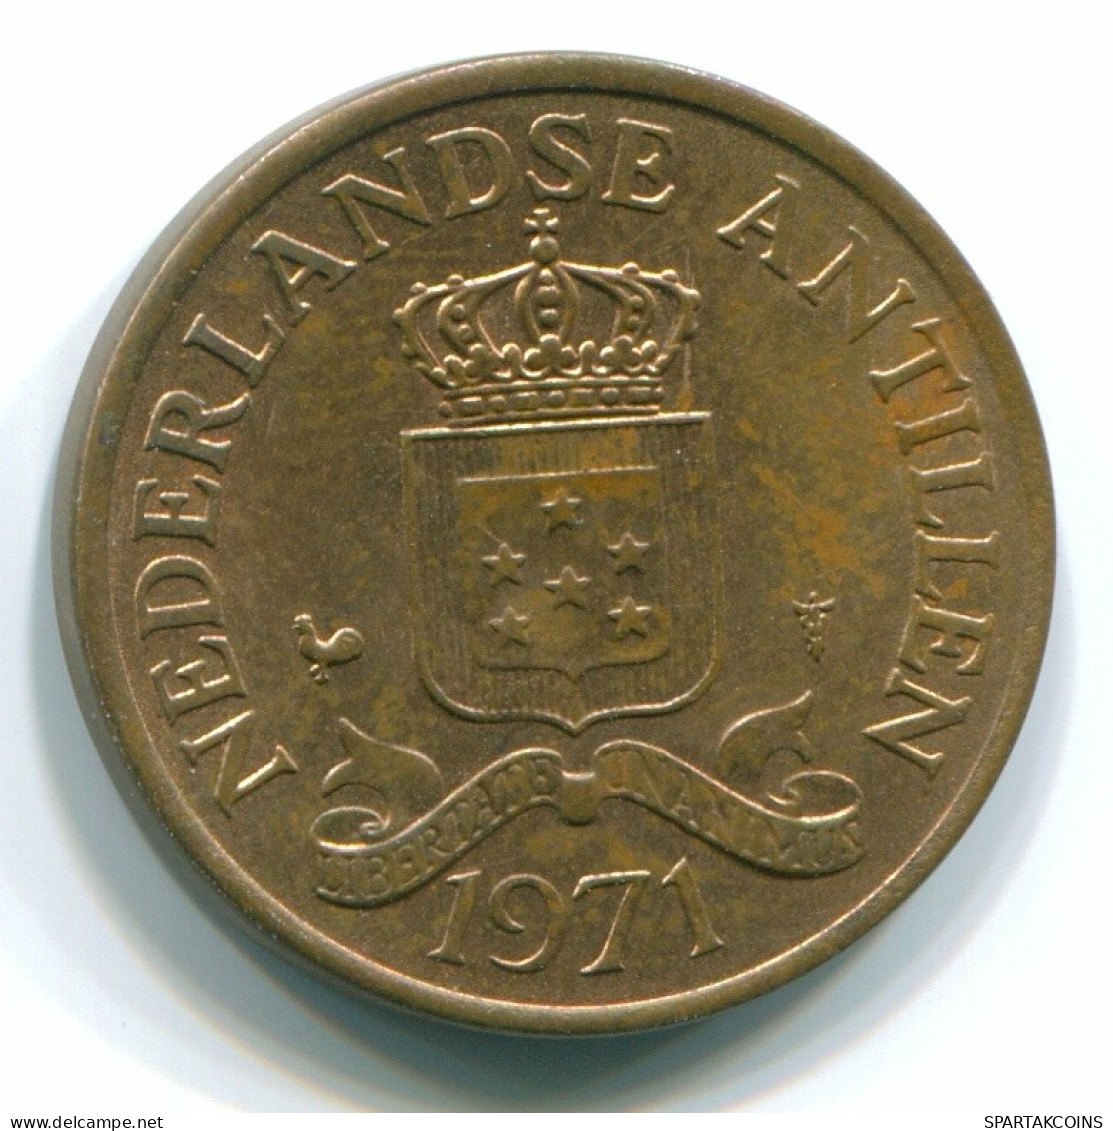 2 1/2 CENT 1971 NIEDERLÄNDISCHE ANTILLEN Bronze Koloniale Münze #S10481.D.A - Netherlands Antilles